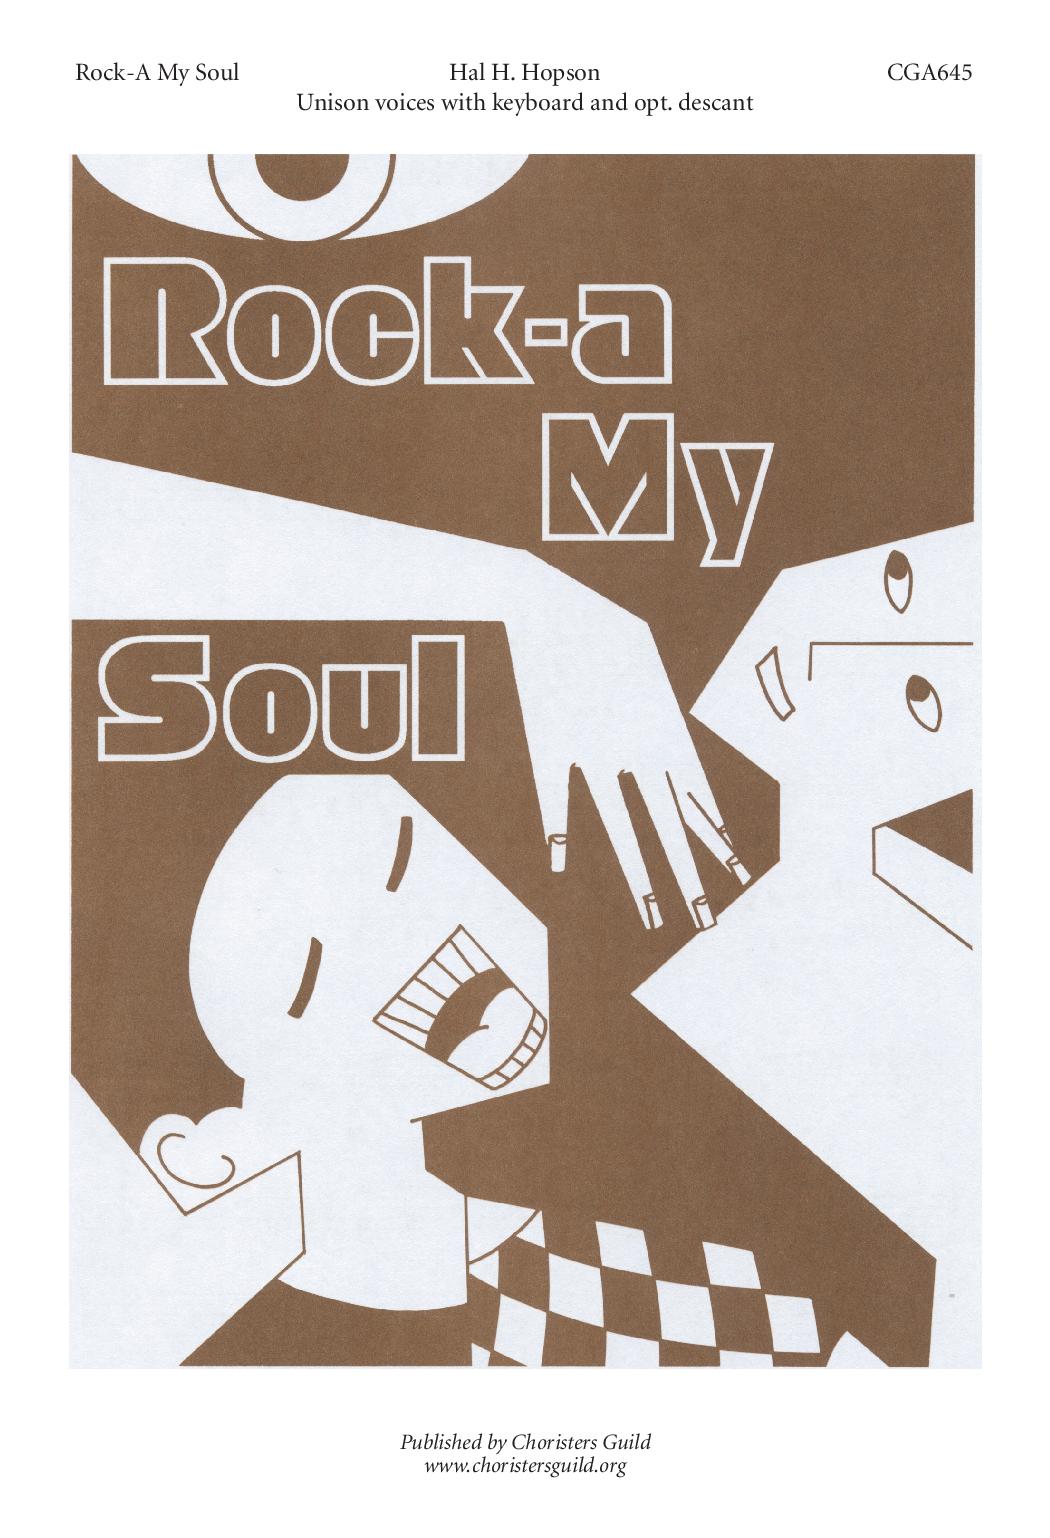 Rocka My Soul